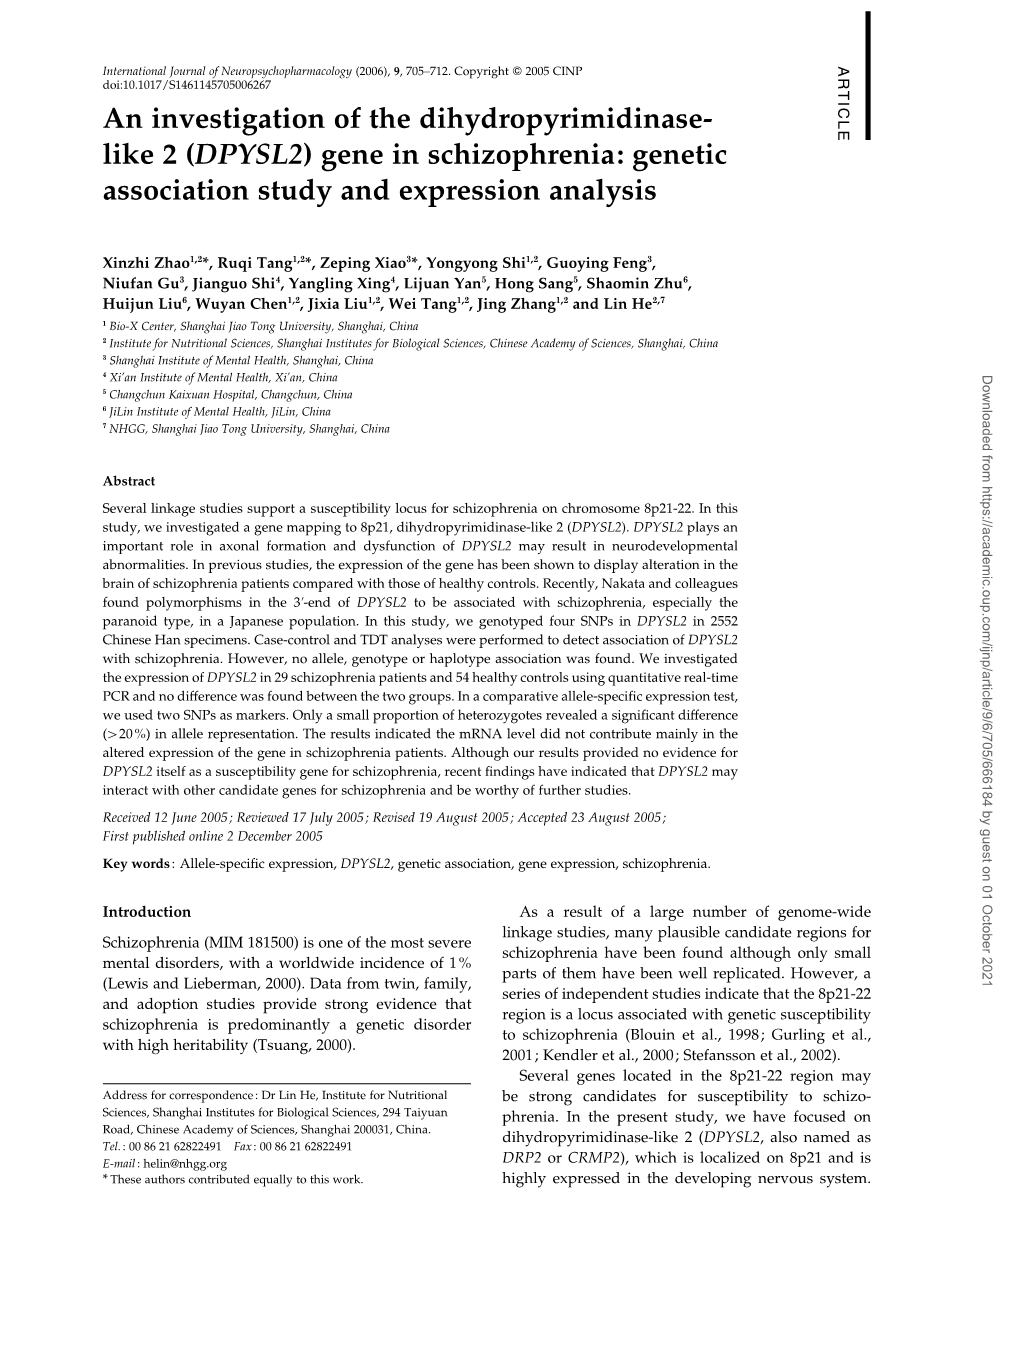 (DPYSL2) Gene in Schizophrenia: Genetic Association Study and Expression Analysis